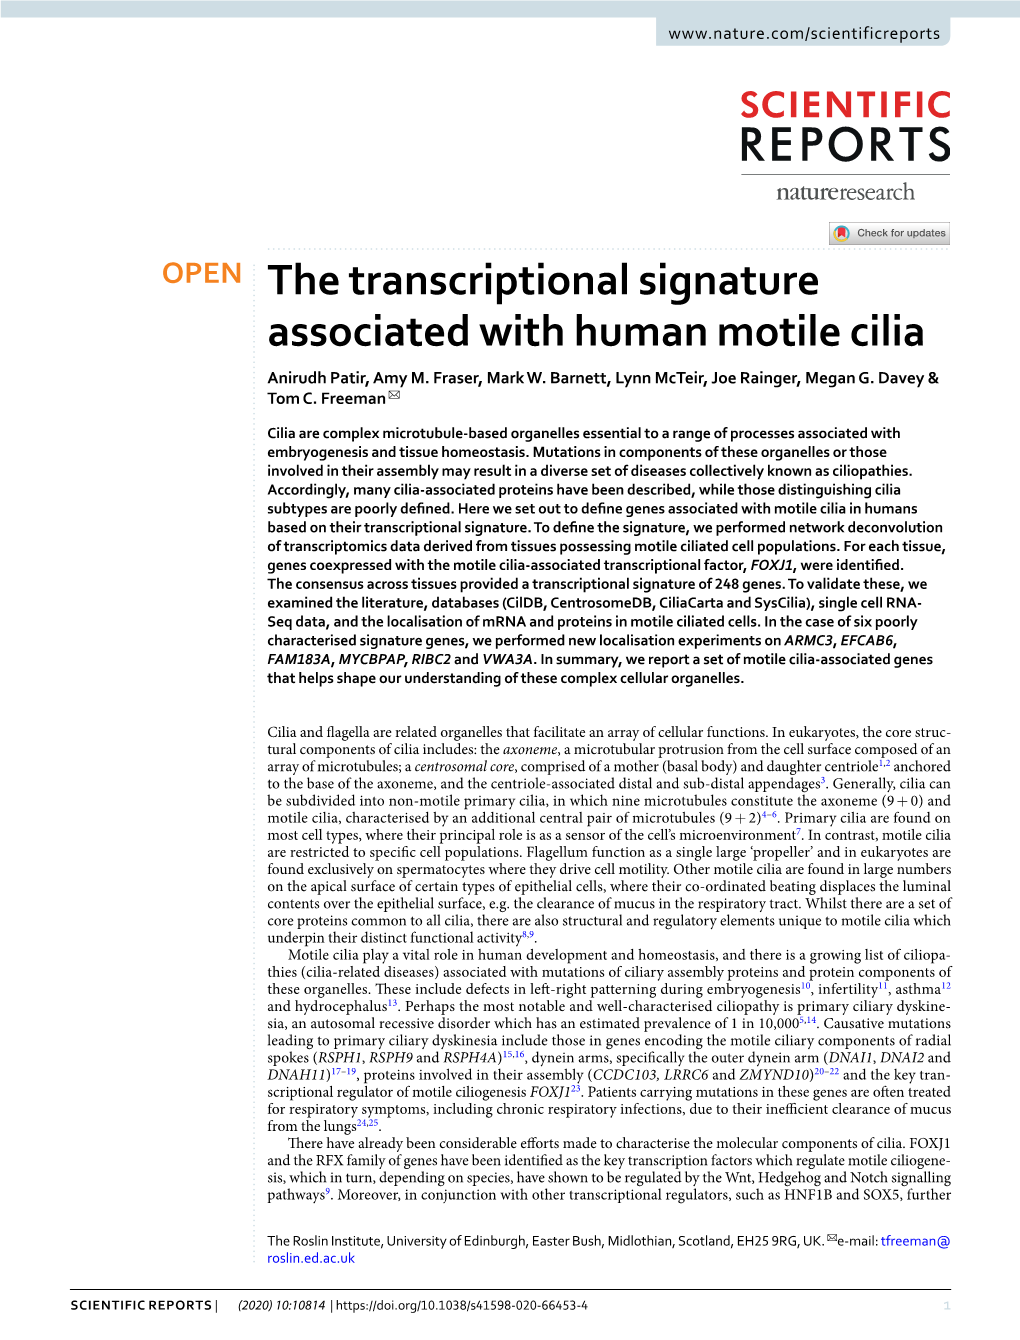 The Transcriptional Signature Associated with Human Motile Cilia Anirudh Patir, Amy M